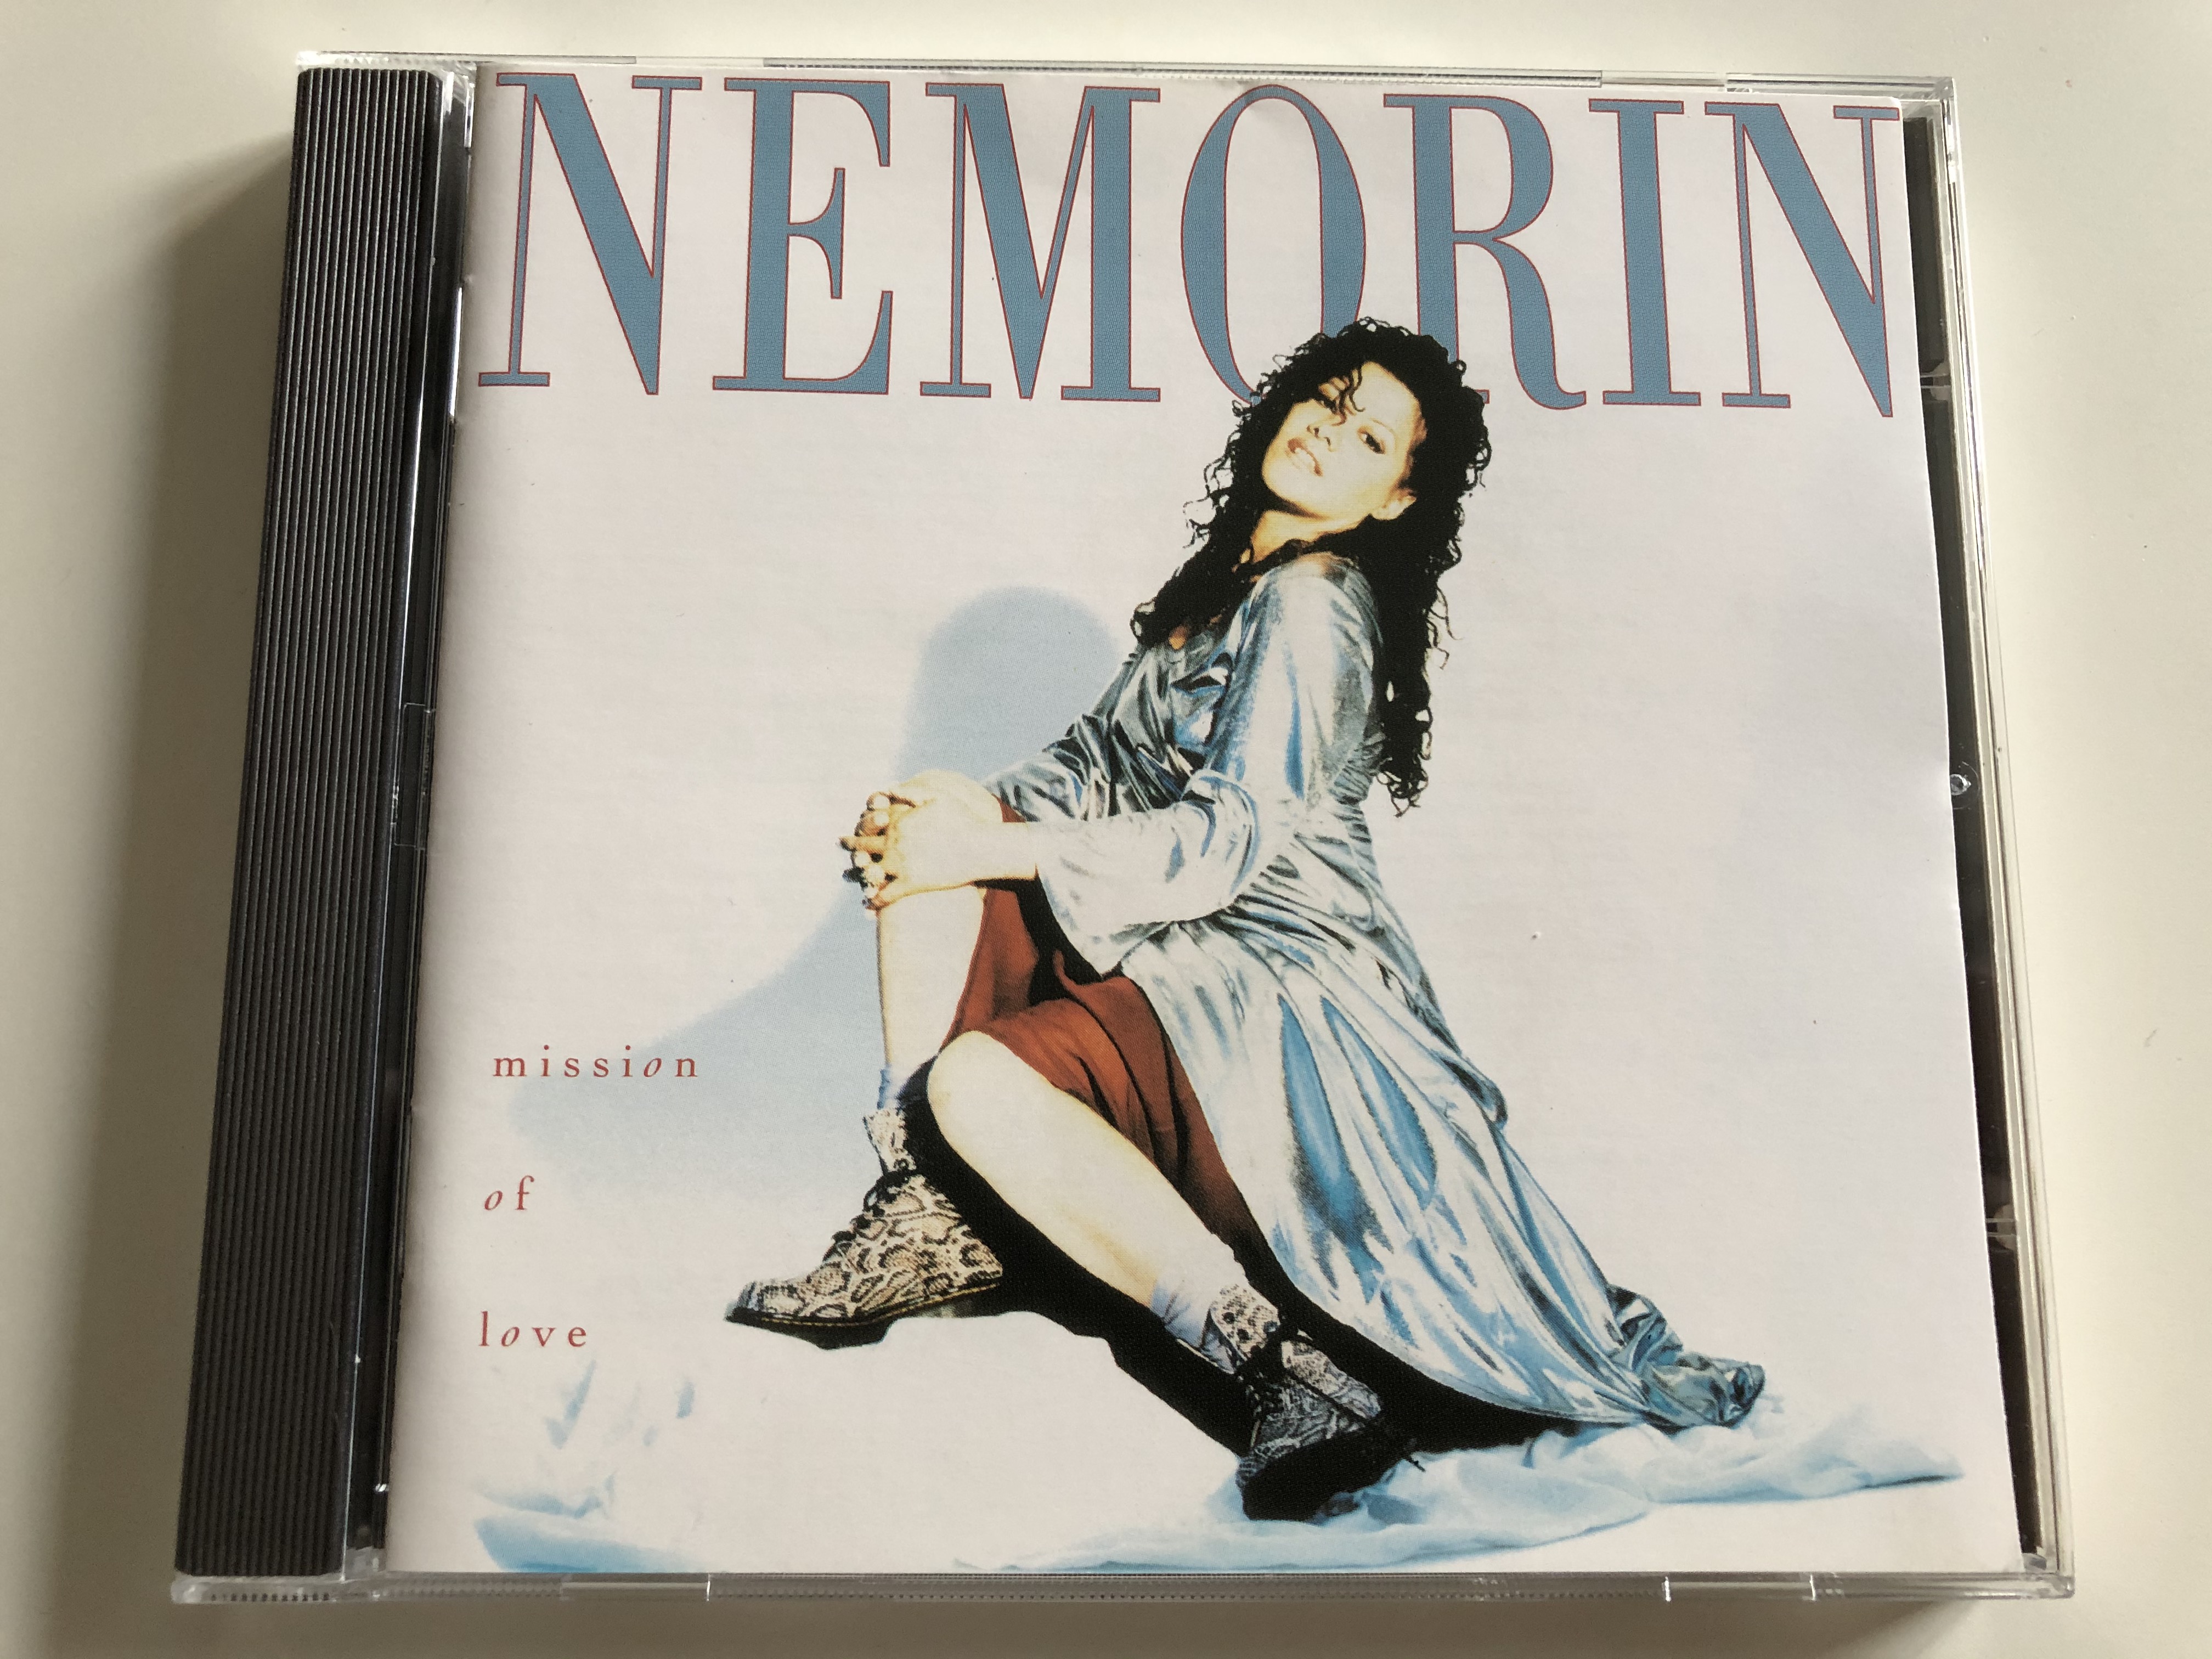 nemorin-mission-of-love-electrola-audio-cd-1995-stereo-724383178421-1-.jpg